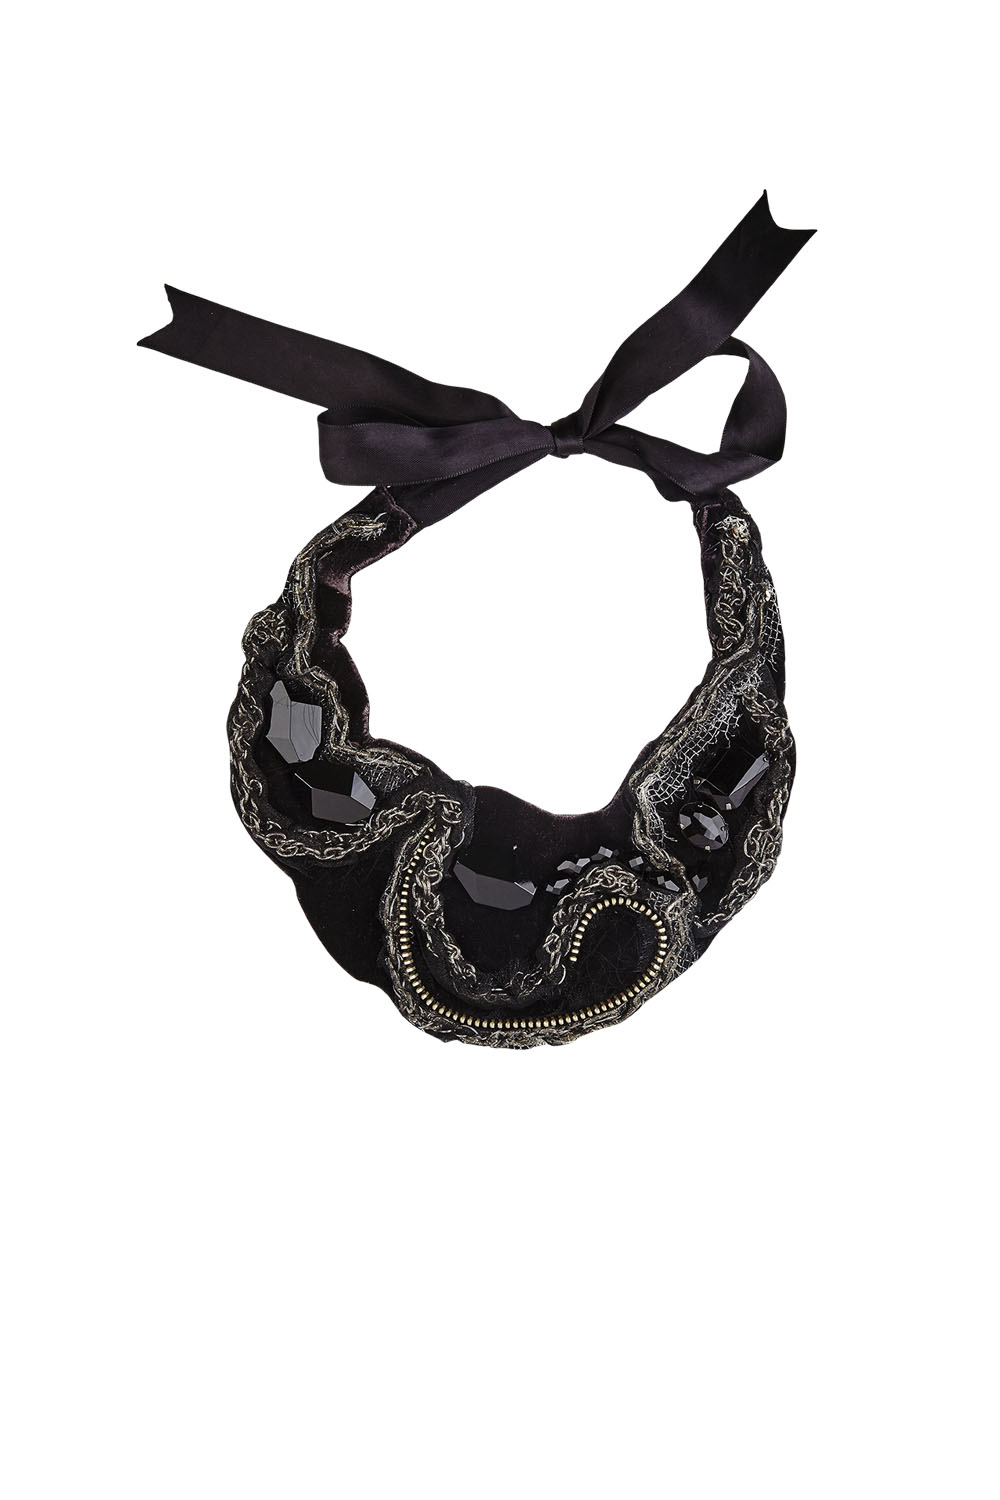 Necklace, $420, by Silk & Steel.